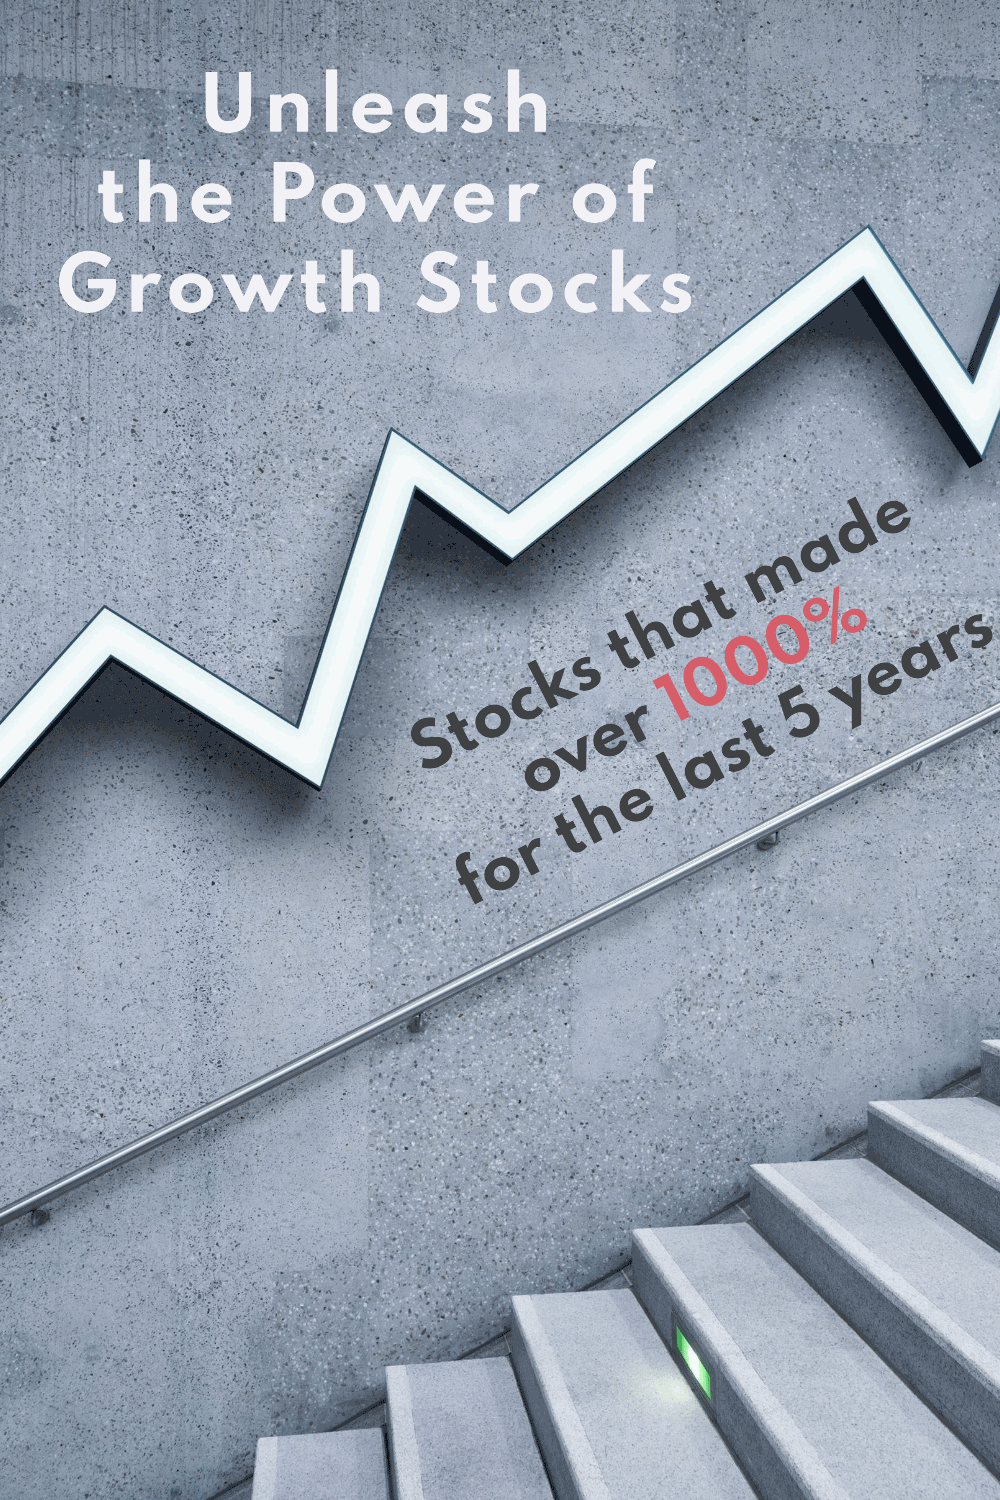 Beyond bluechips: 1000% growth stocks crushing the market